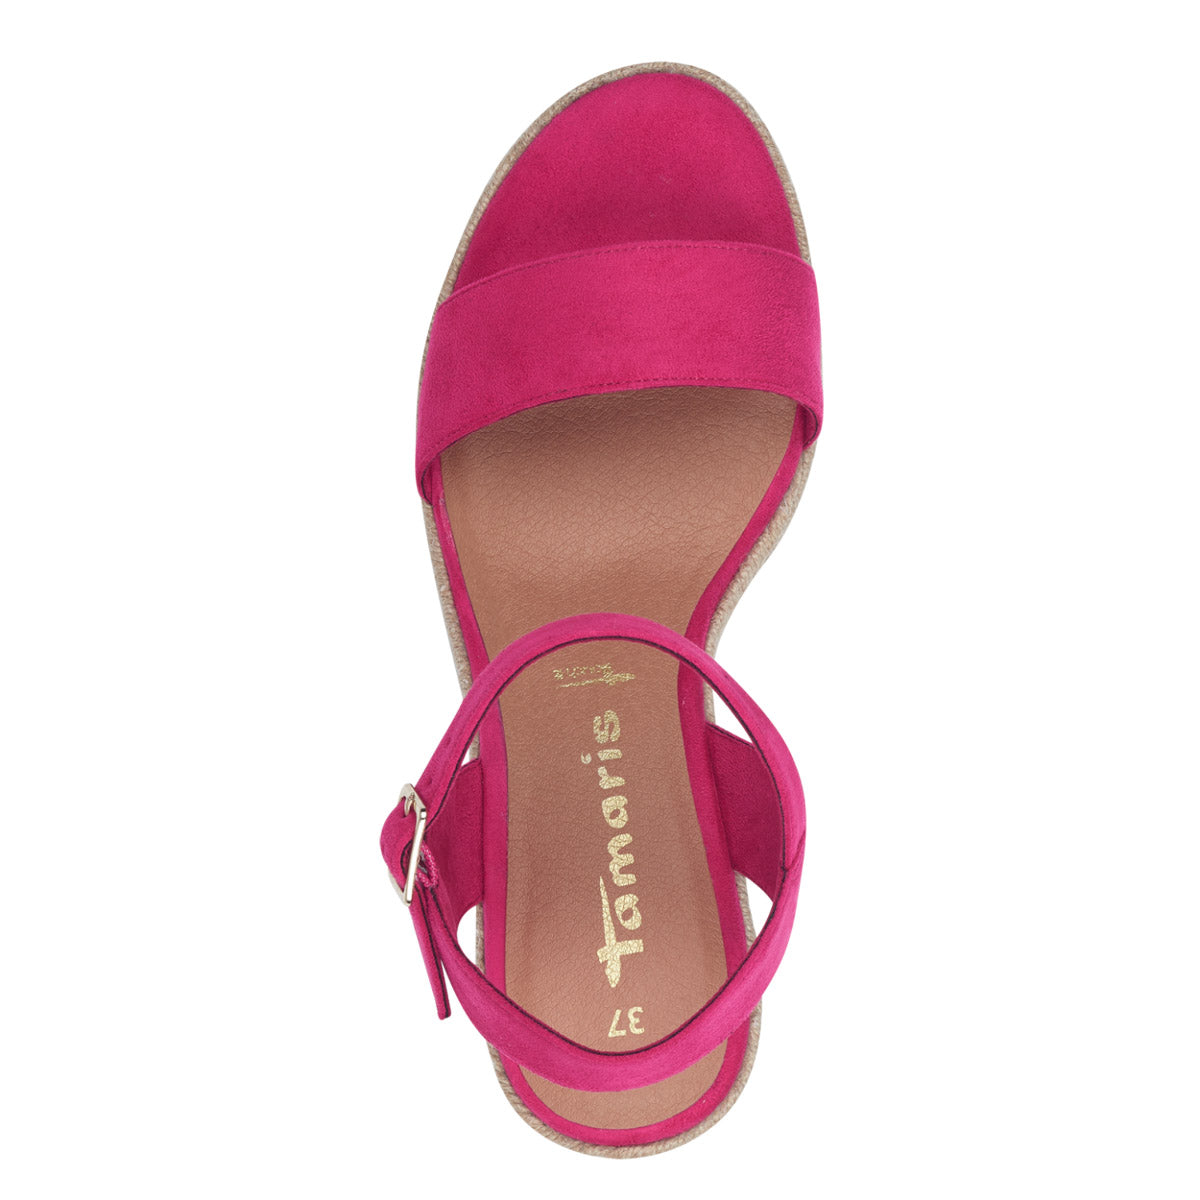 Super Stylish Pink Espadrille Wedge Sandals